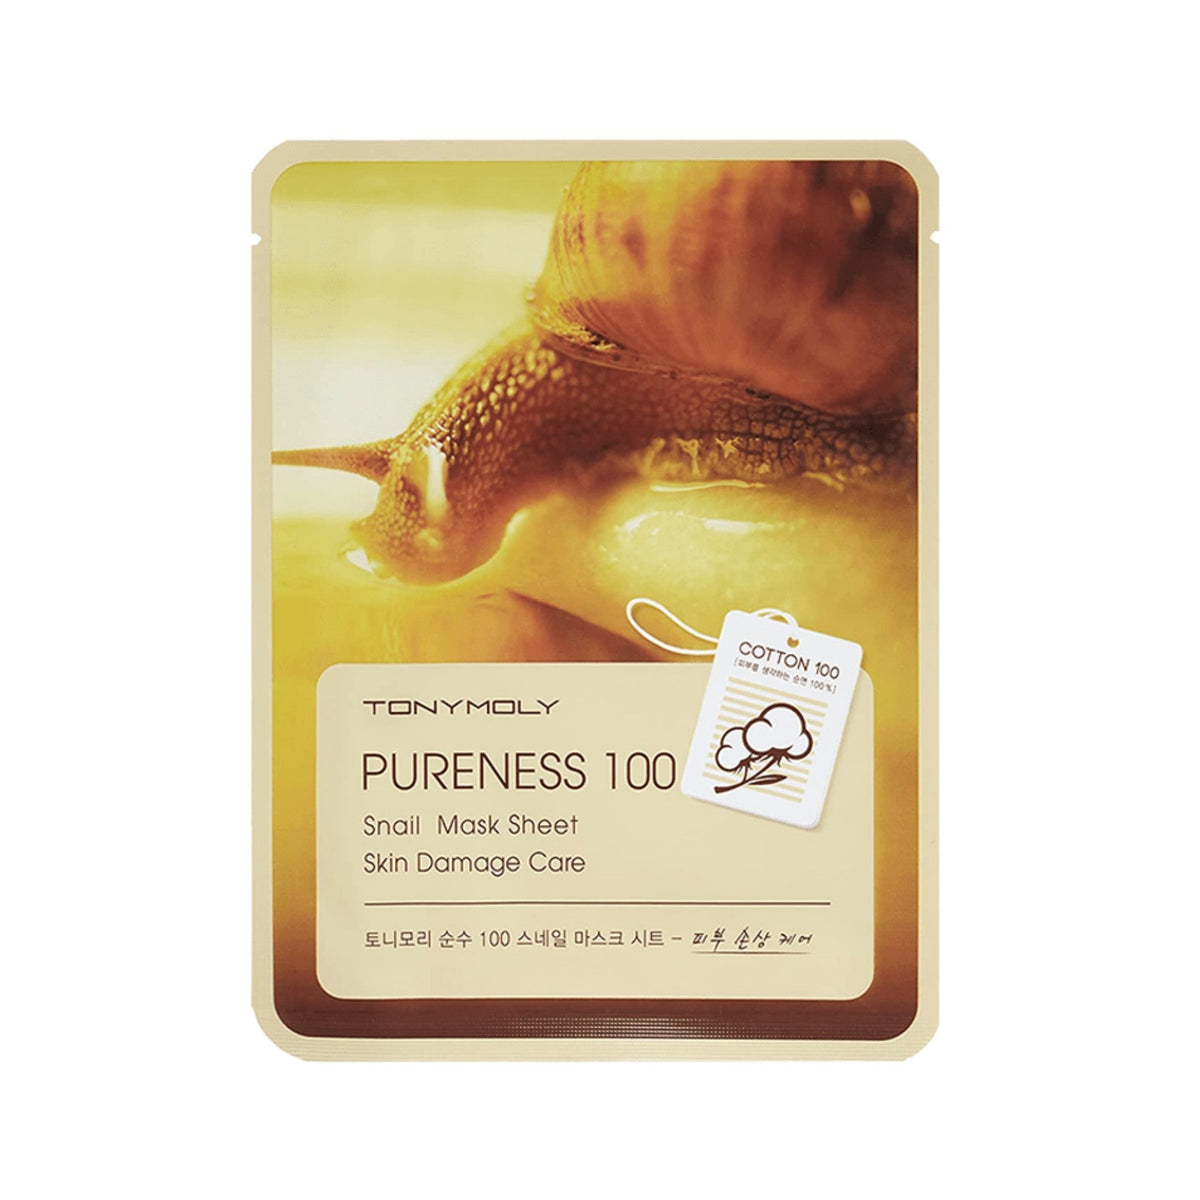 Pureness 100 Mask Sheet (Snail)